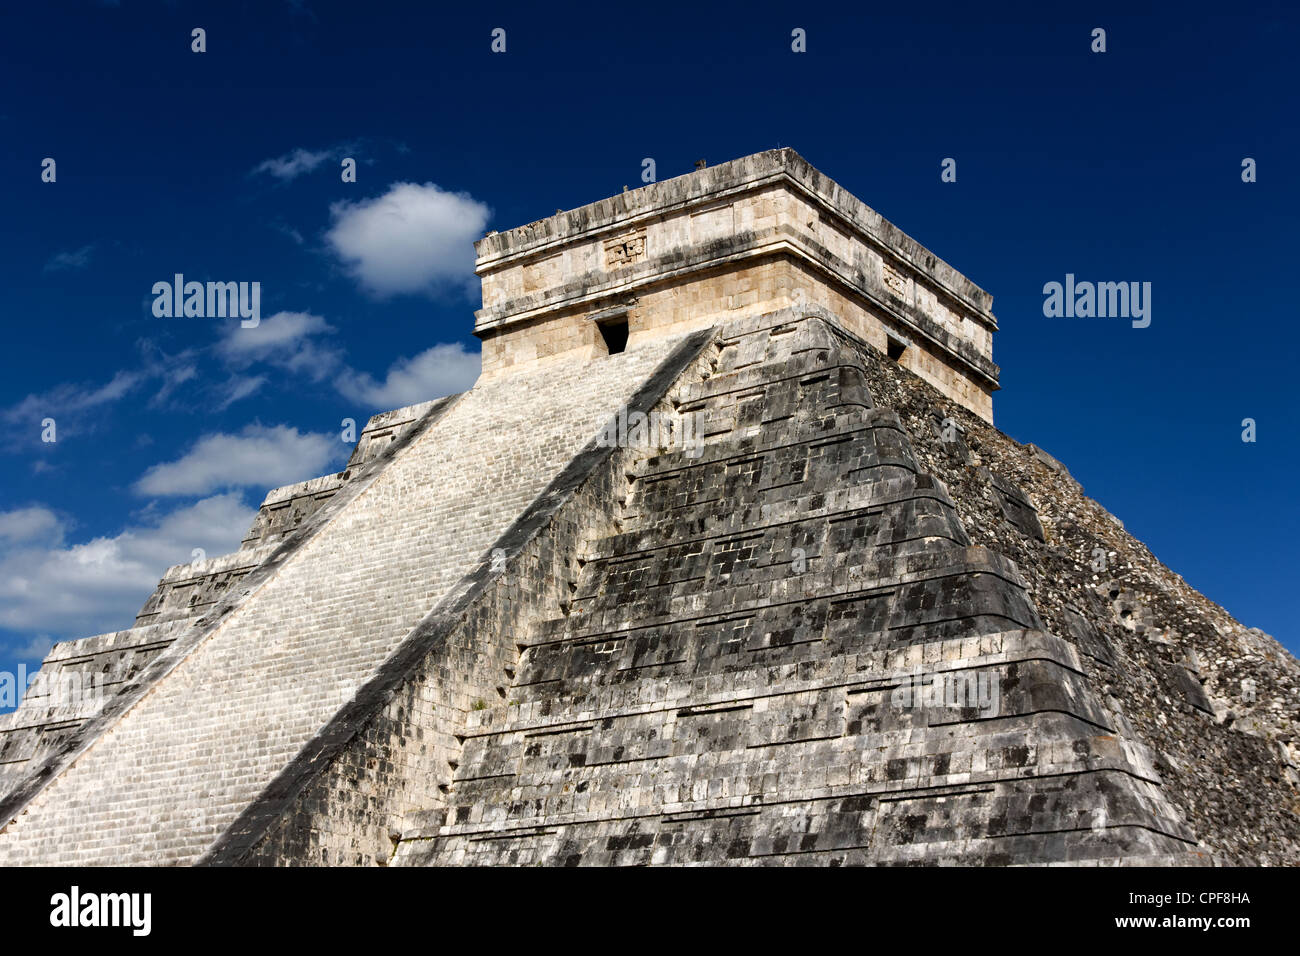 Famous landmark Mayan Pyramid to Kukulkan, the feathered serpent god, at Chichen Itza, Yucatan, Mexico. Stock Photo